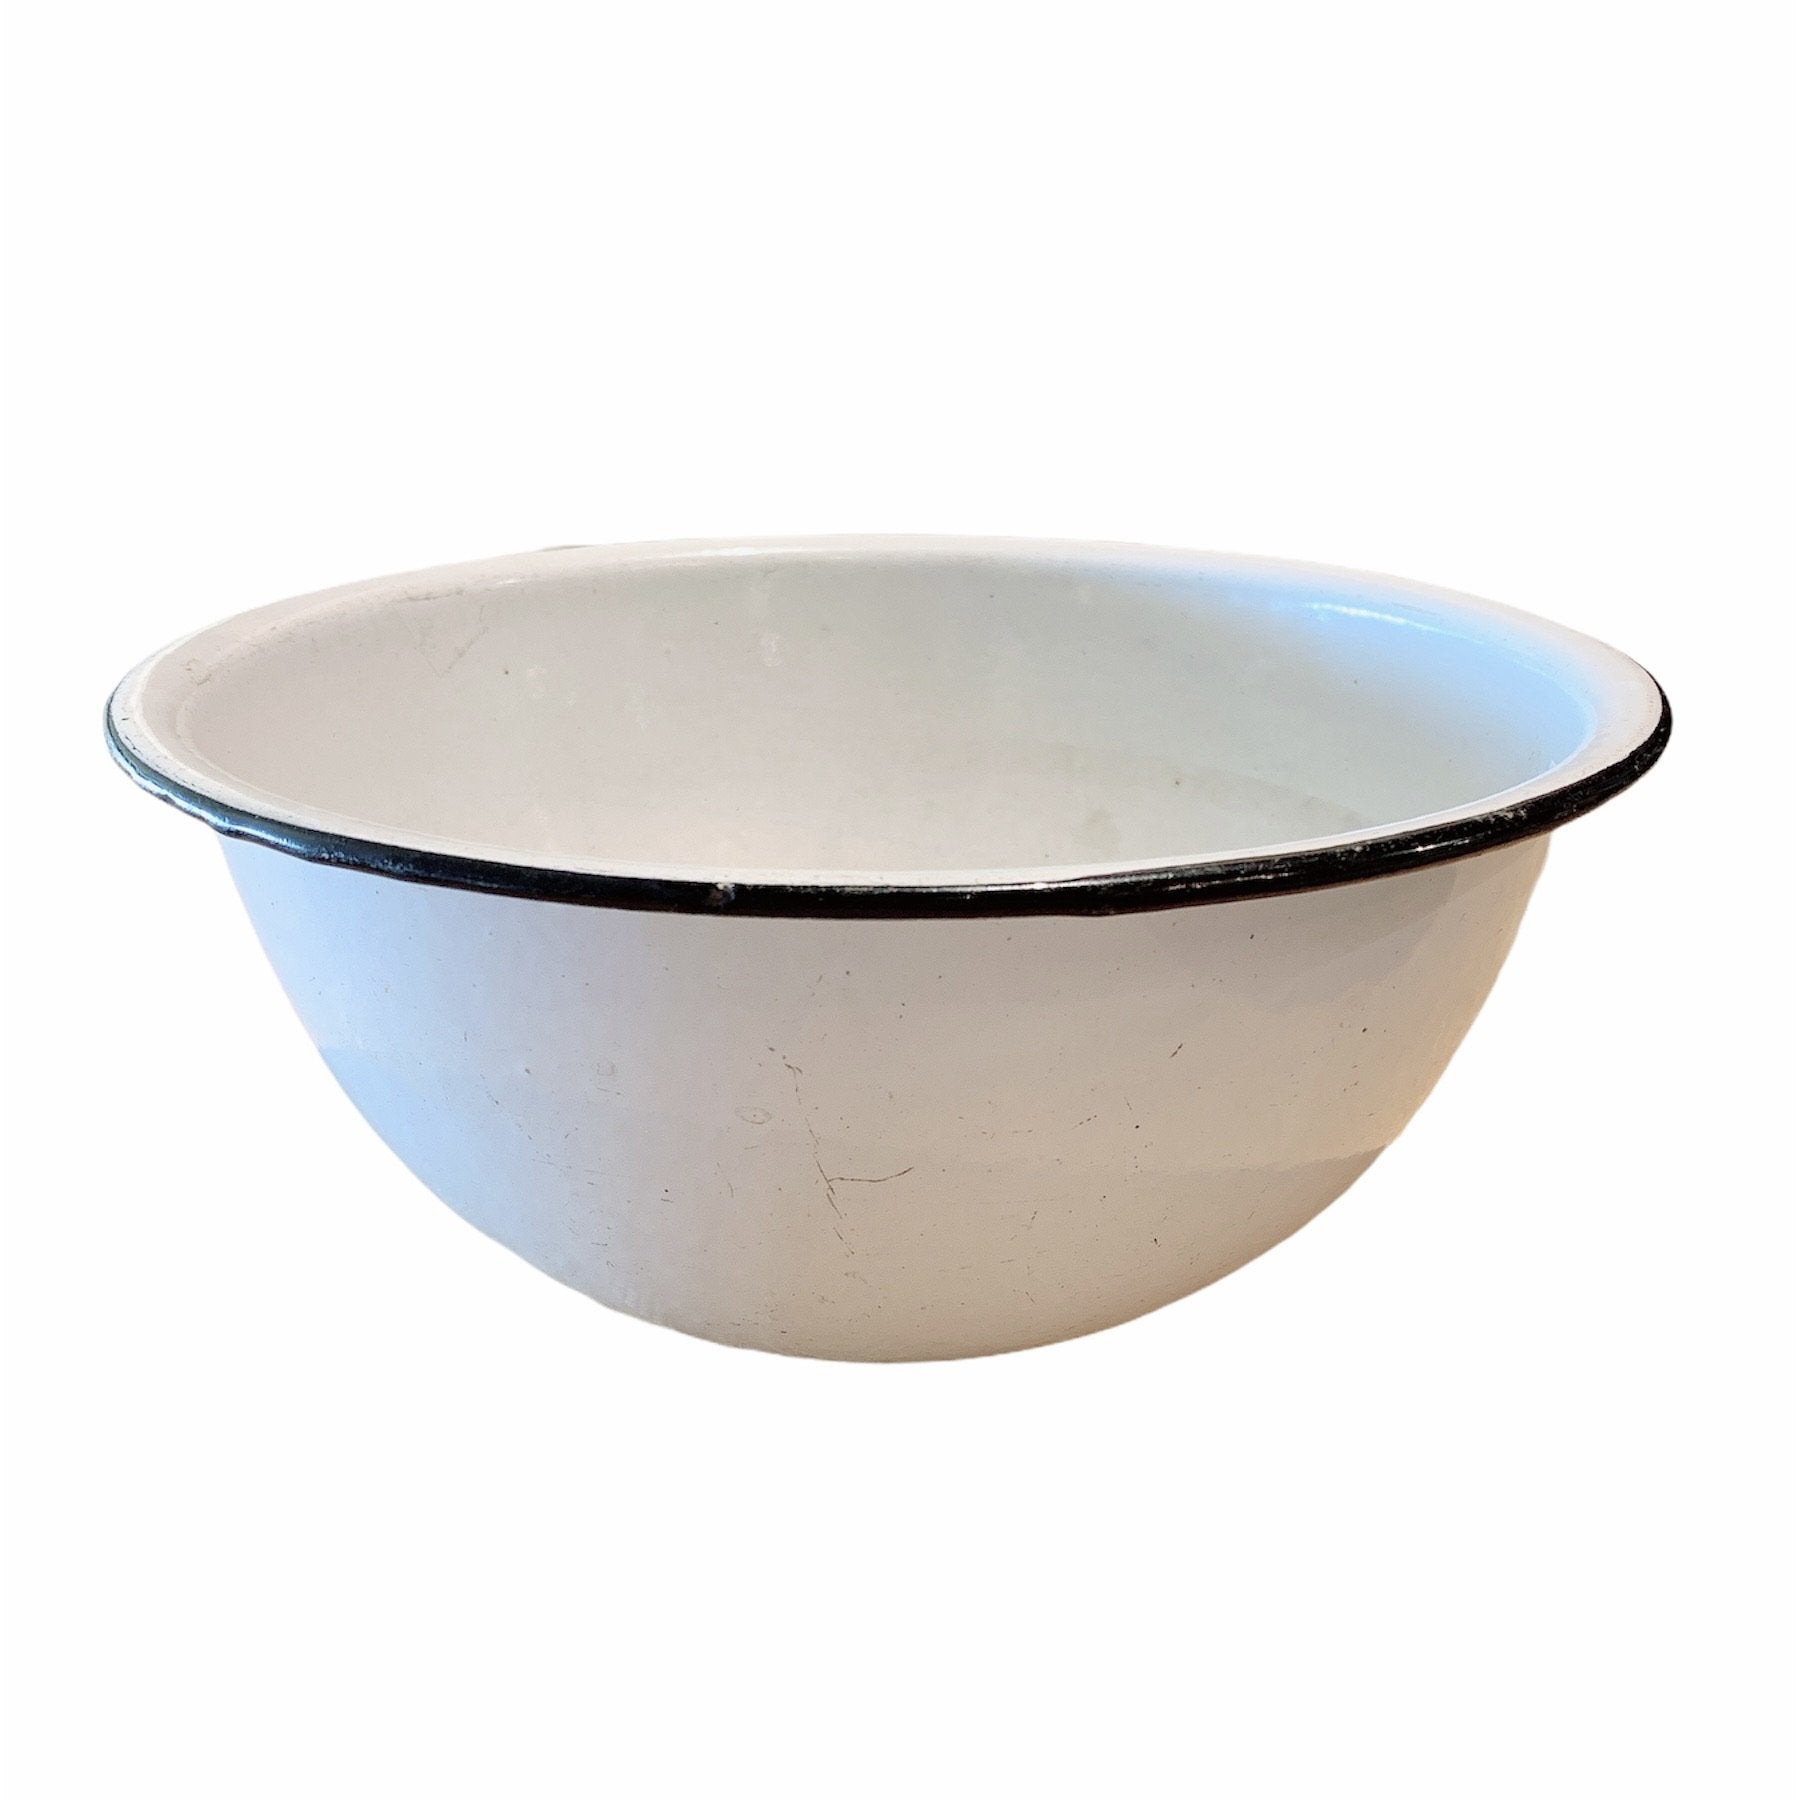 Vintage Enamelware Bowl with Black Trim